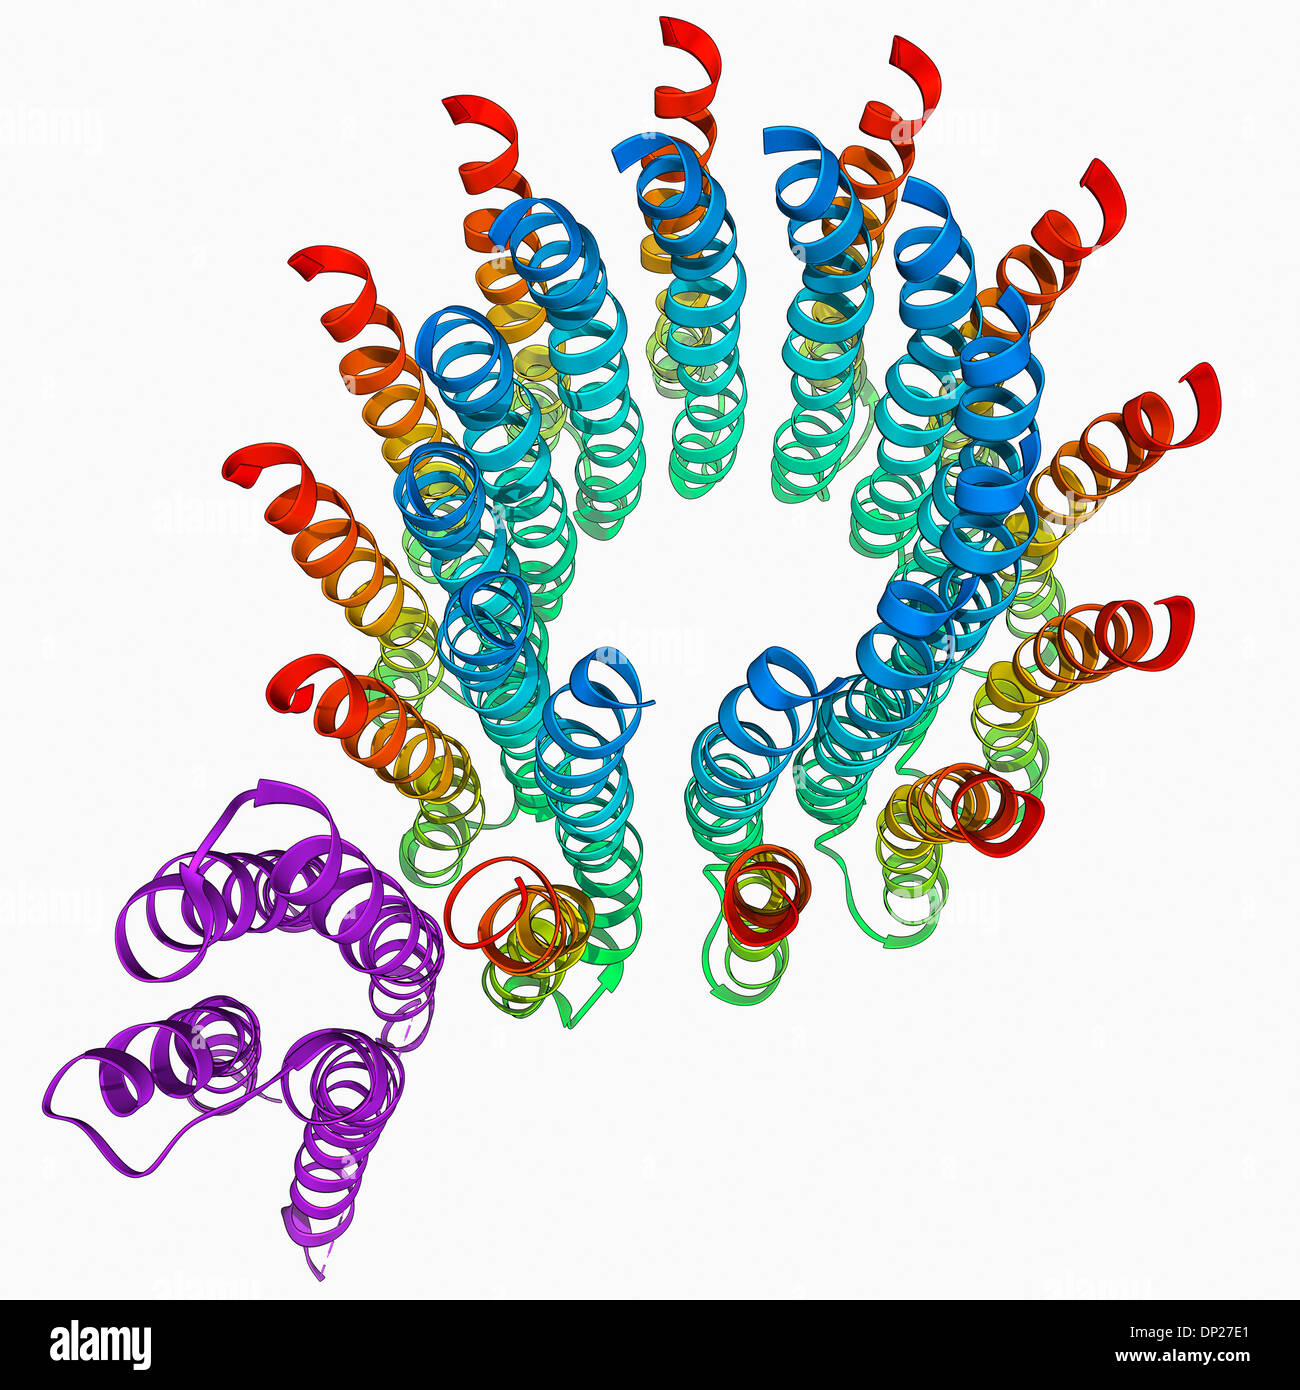 ATP synthase molecule Stock Photo